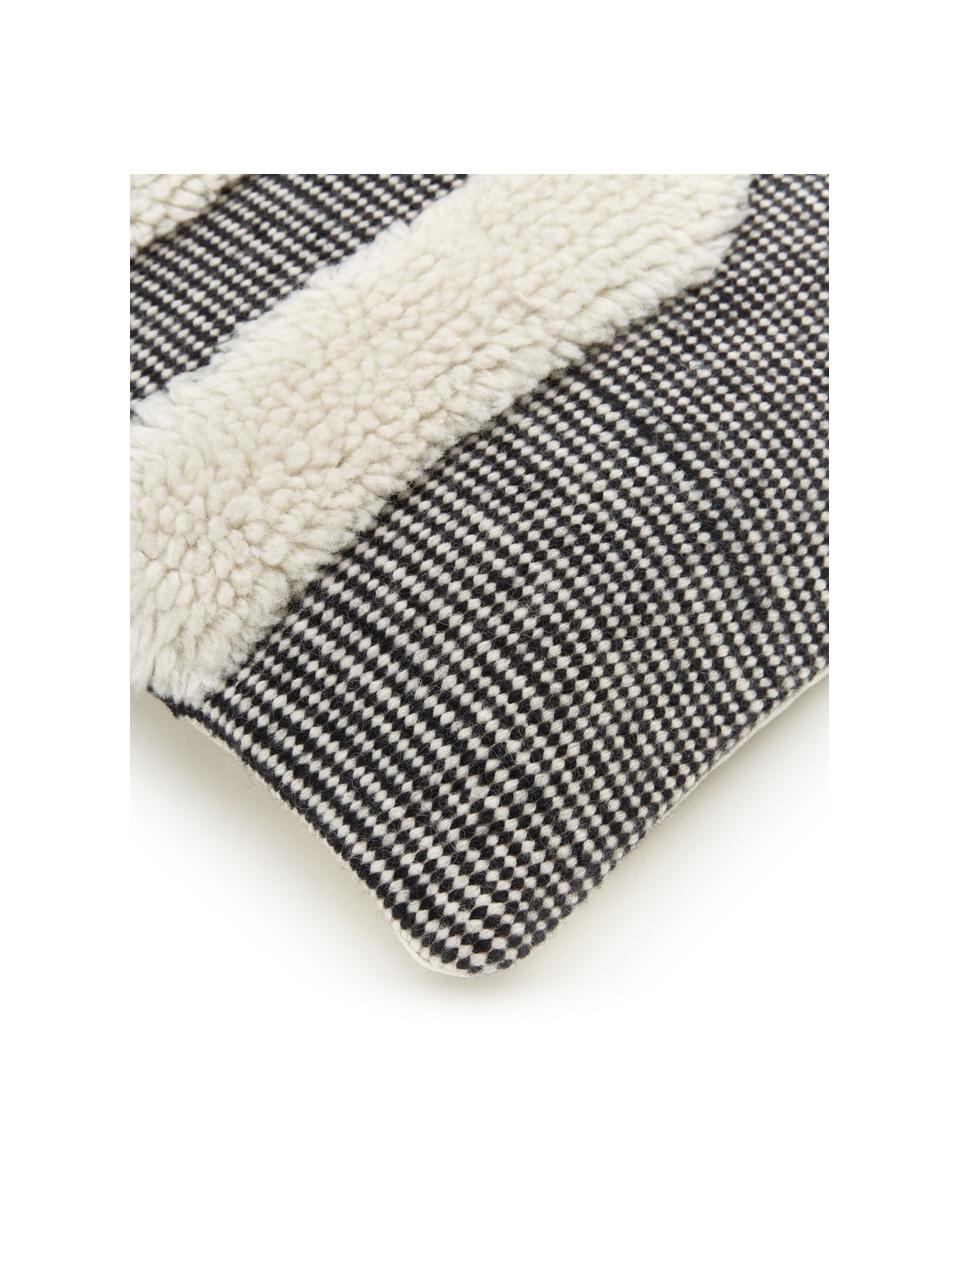 Funda de cojín artesanal Laine, Parte superior: 90% lana, 10% algodón, Parte trasera: 100% algodón, Negro, blanco crema, An 45 x L 45 cm